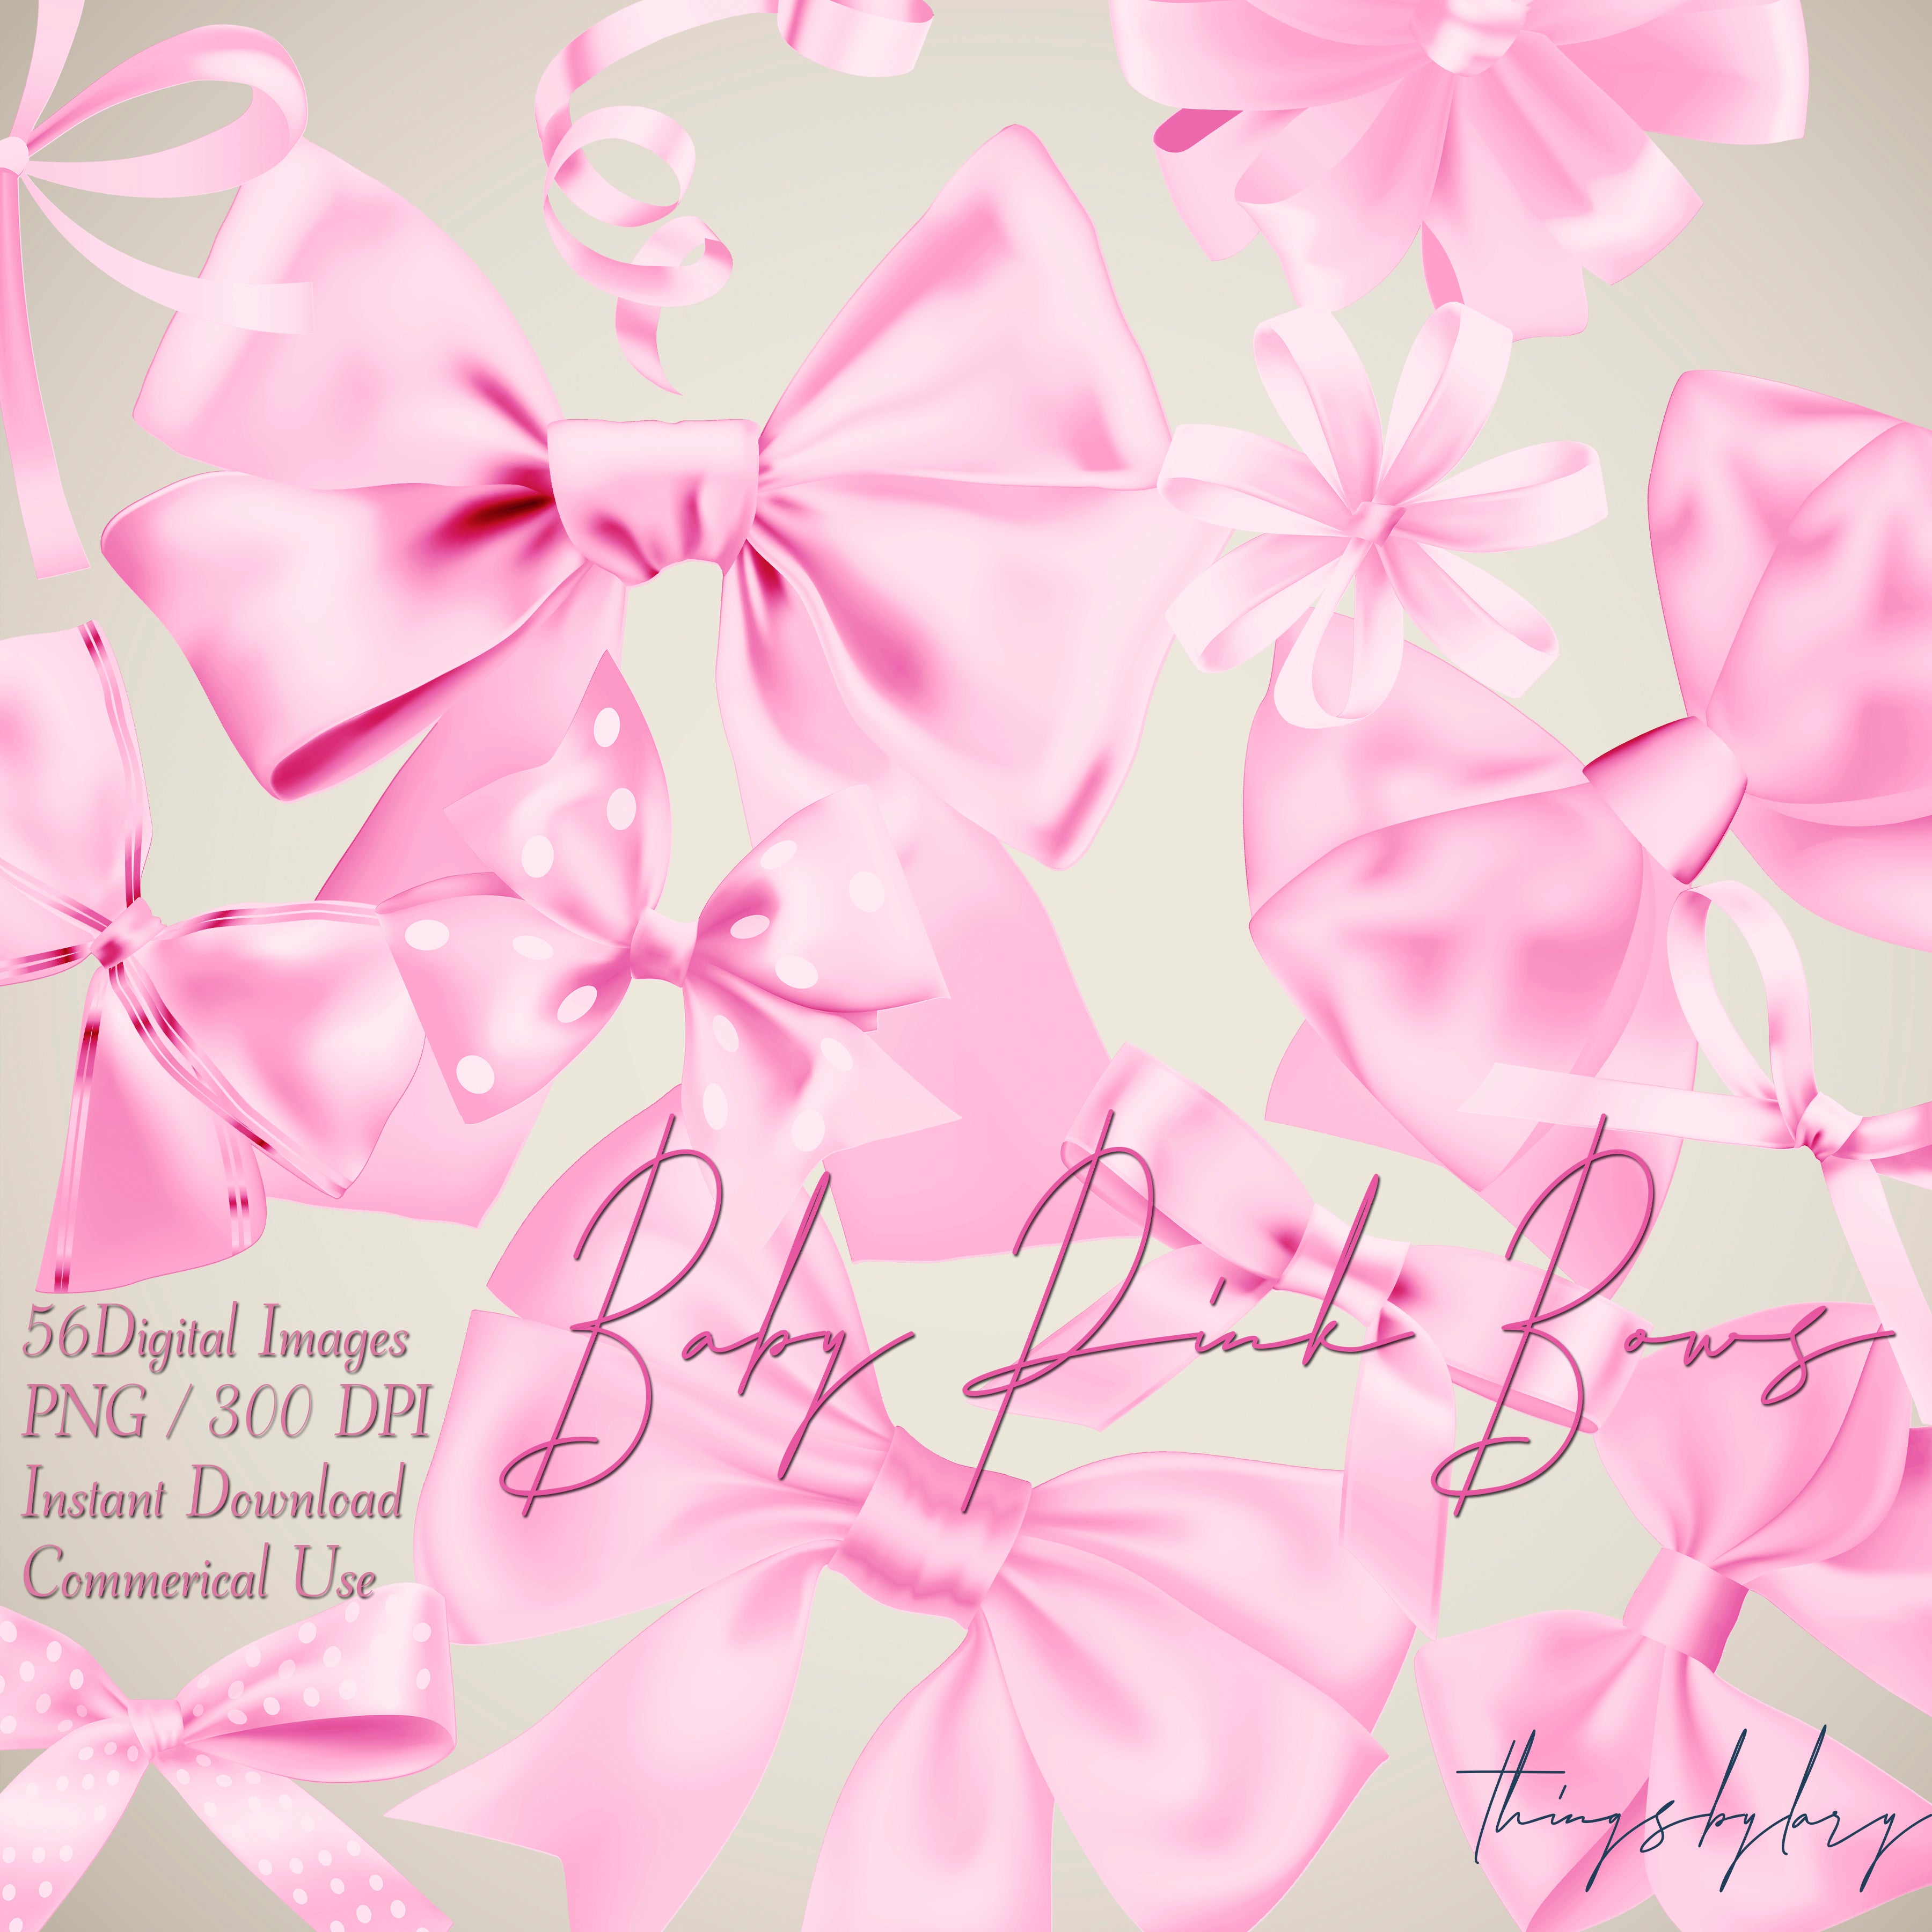 56 Baby Pink Bows and Ribbons Digital Images